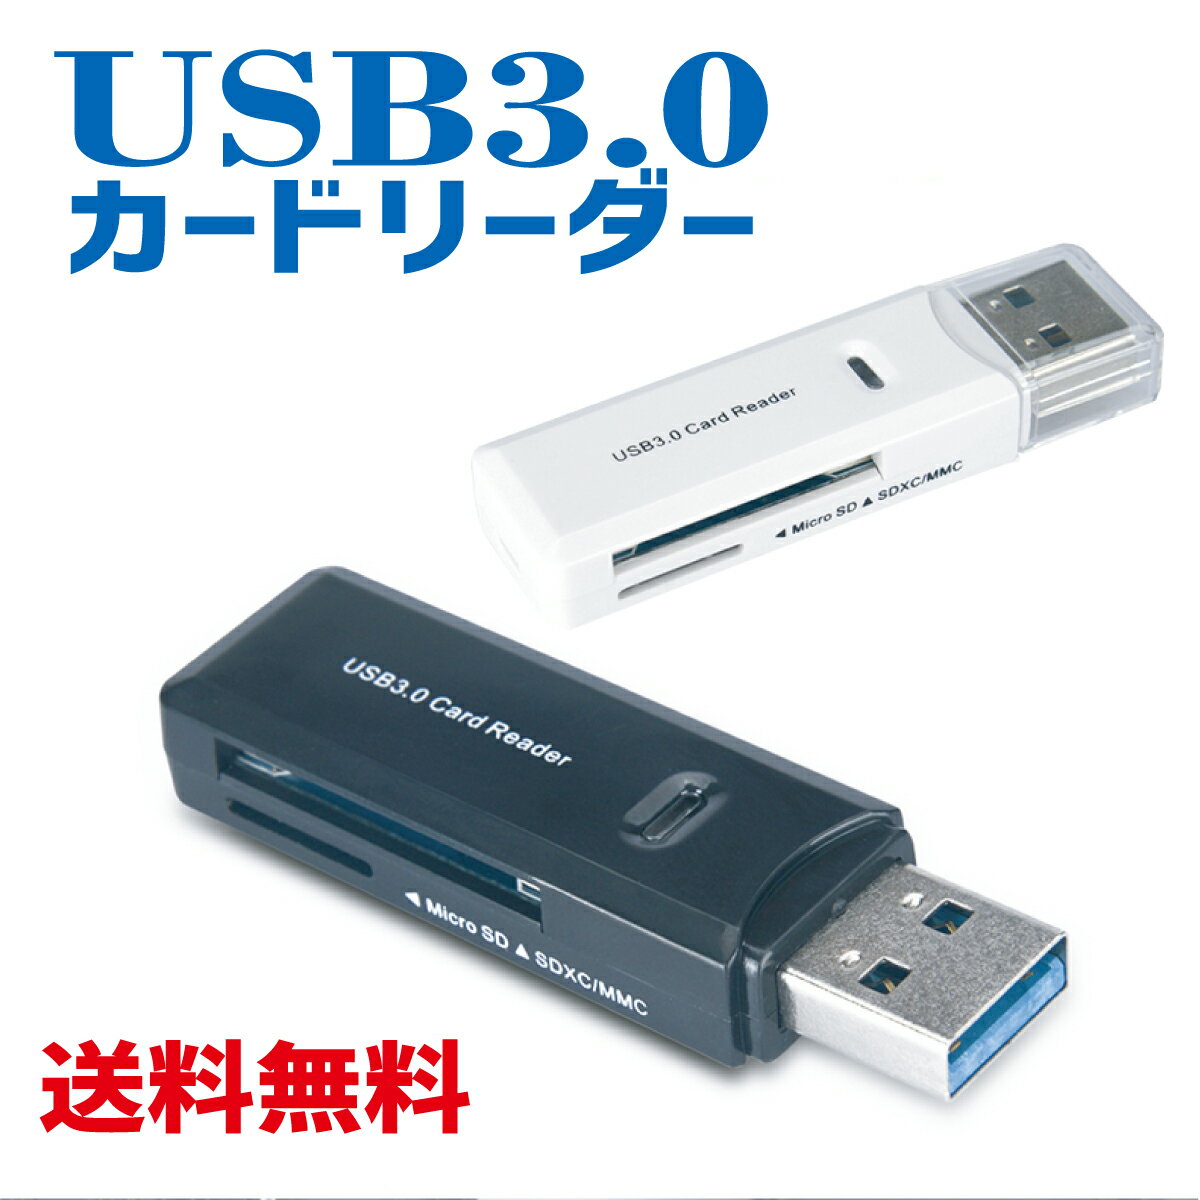 USB3.0J[h[_[SD SDHC MMC RSMMC MMC mobile MMC micro SDXC UHS-I MicroSD T-FLASH